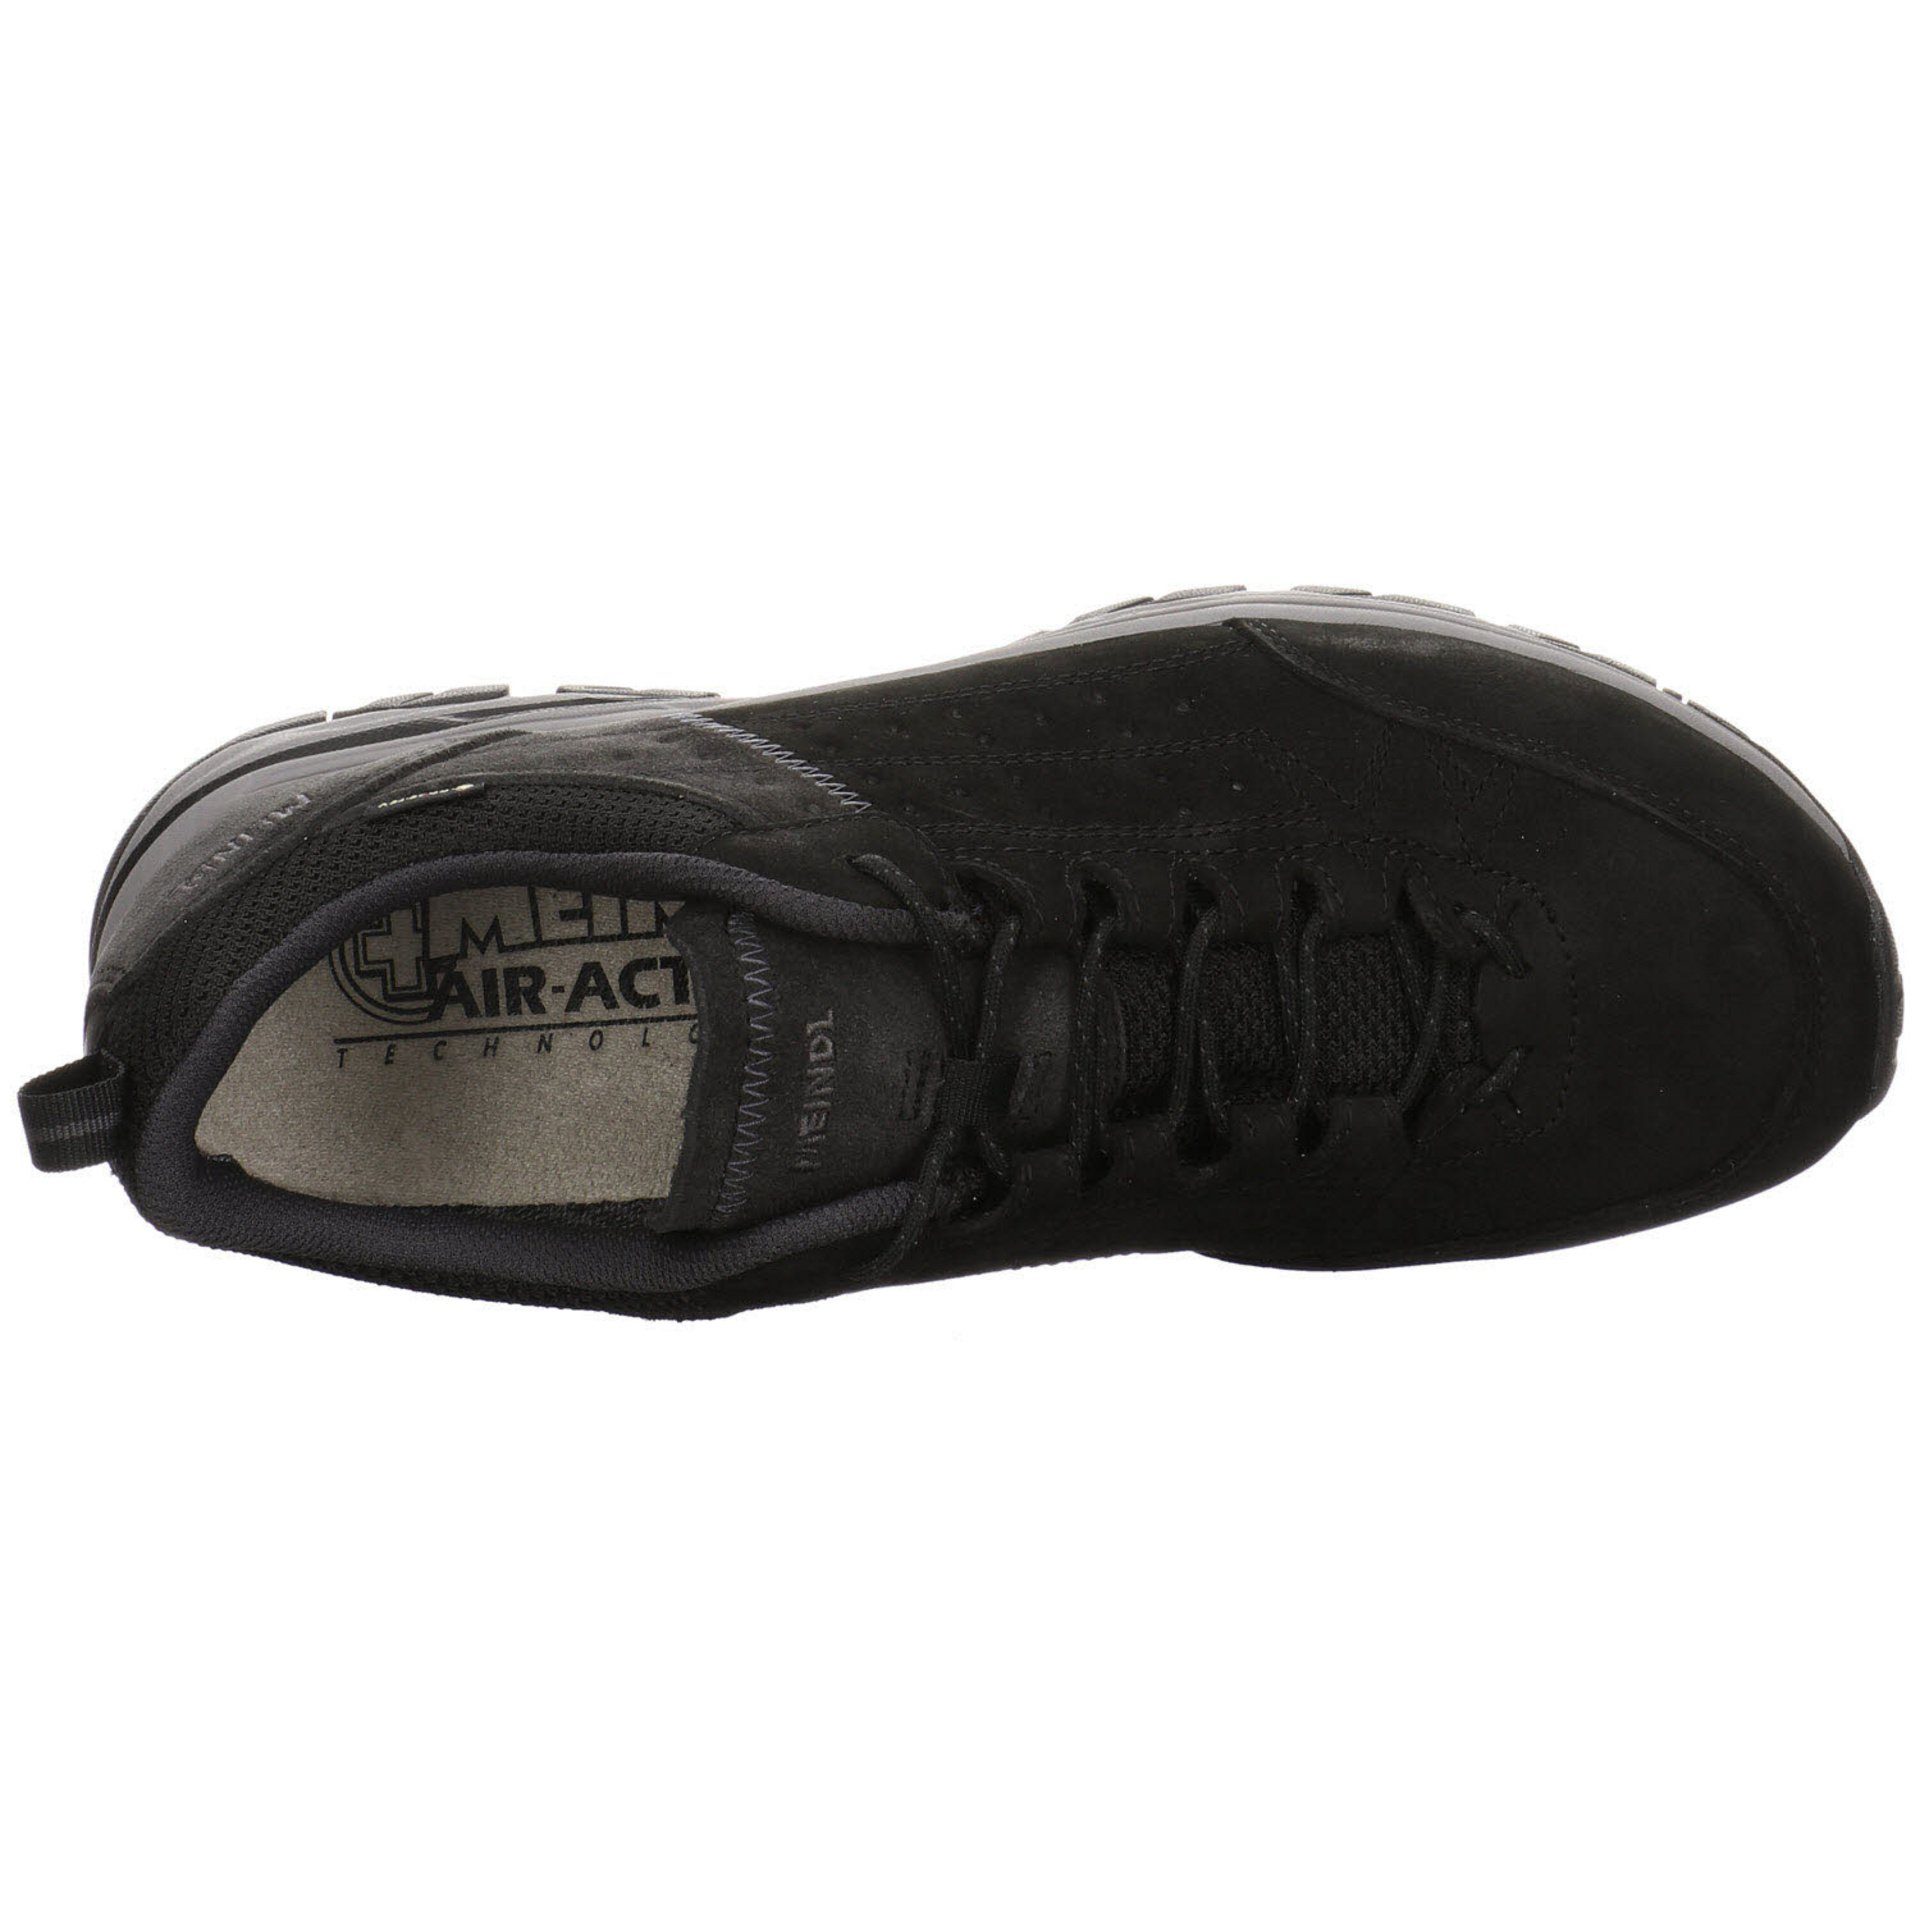 dunkel Leder-/Textilkombination Herren Durban GTX Outdoor Outdoorschuh Meindl schwarz Schuhe Outdoorschuh